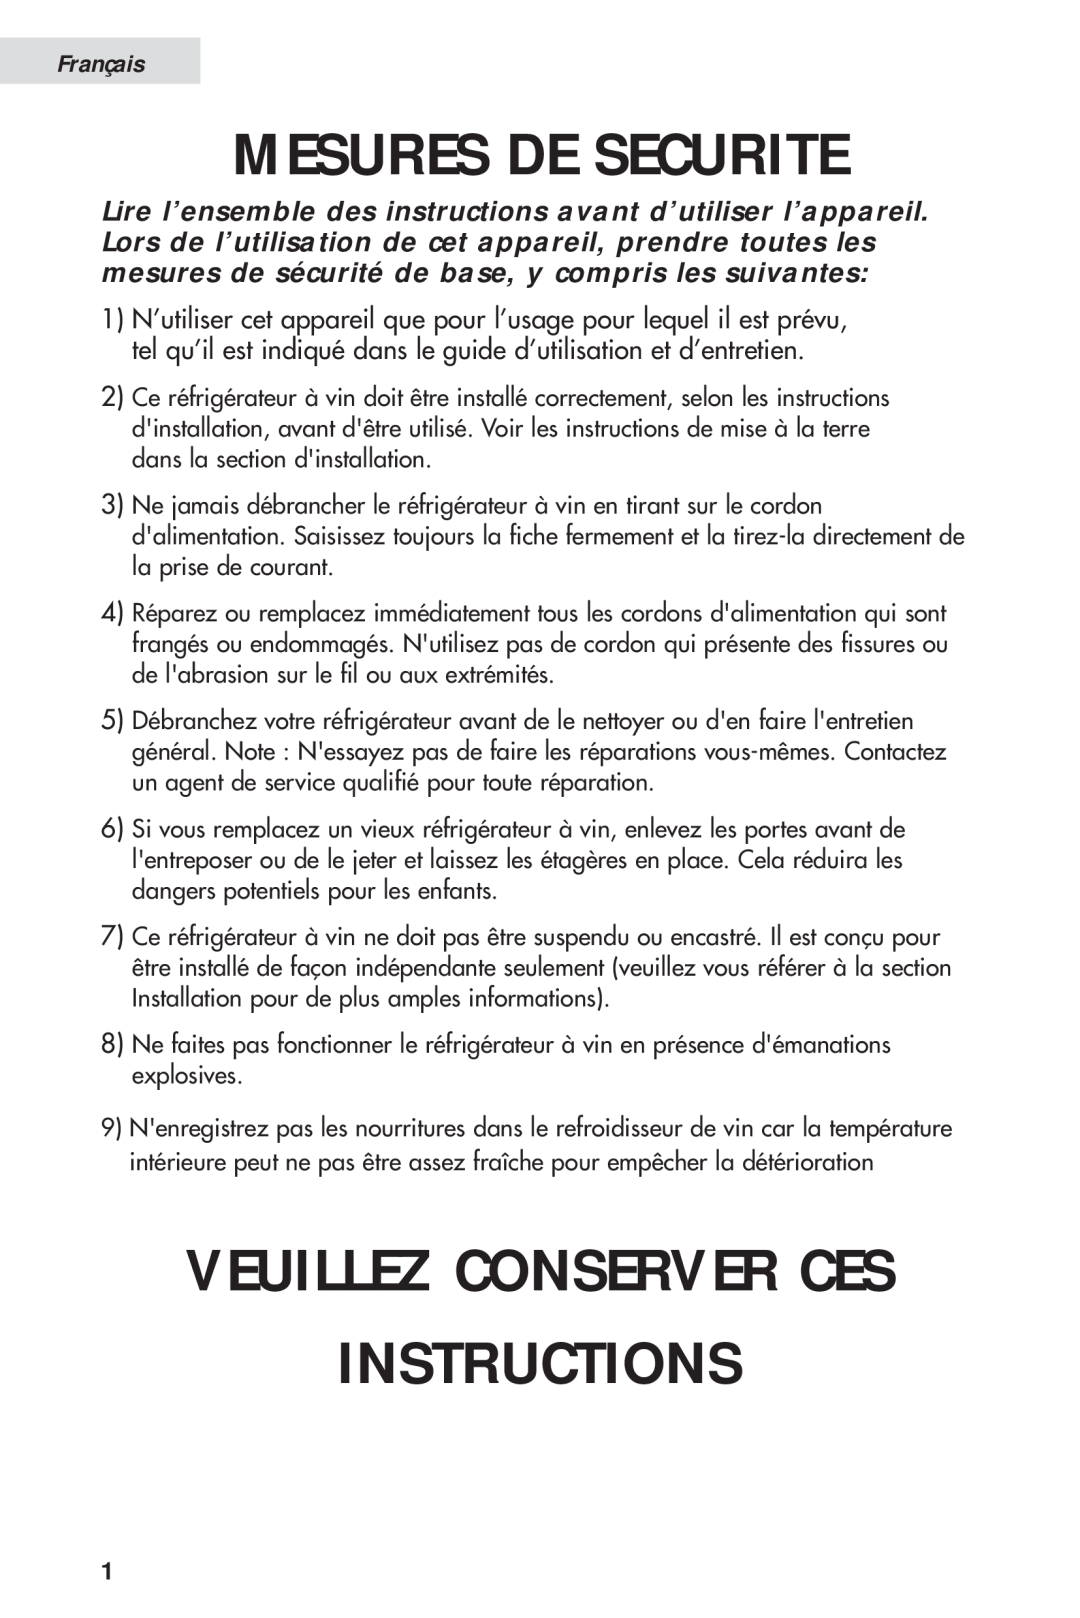 Haier HVH014A manual Instructions, Veuillez Conserver Ces, Français, Mesures De Securite 